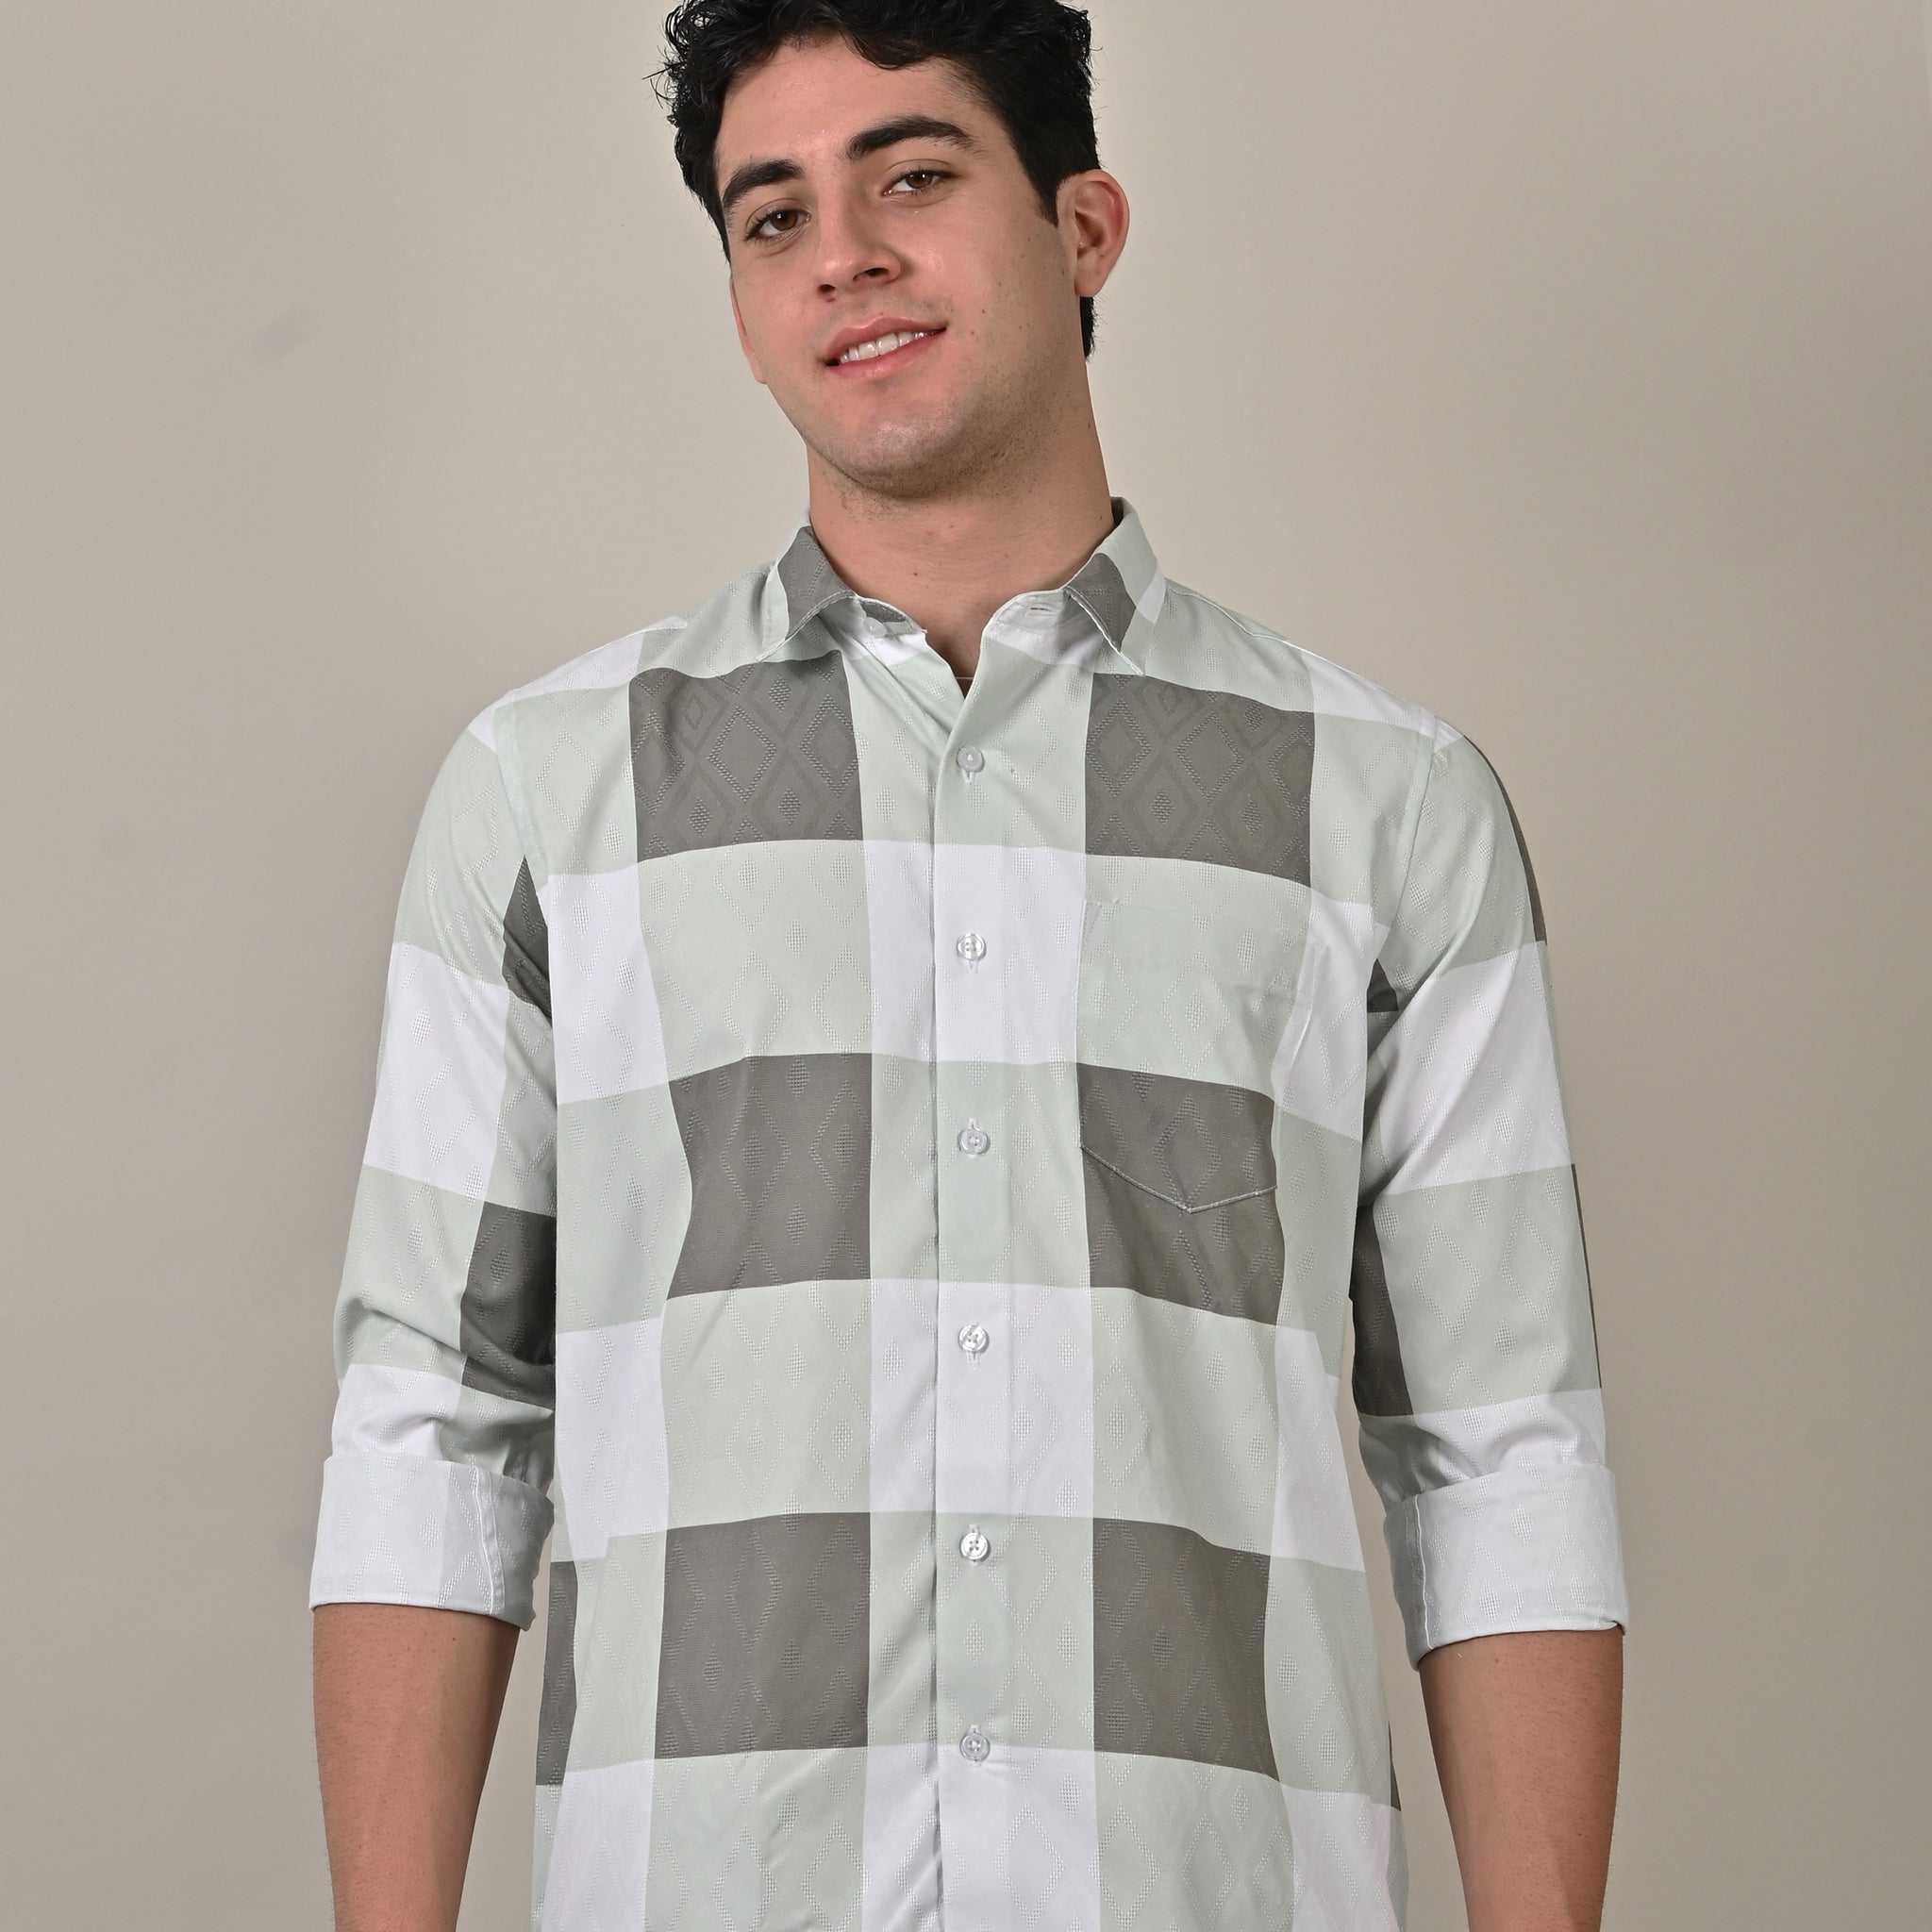 Crochet Checkered Olive Printed Shirt